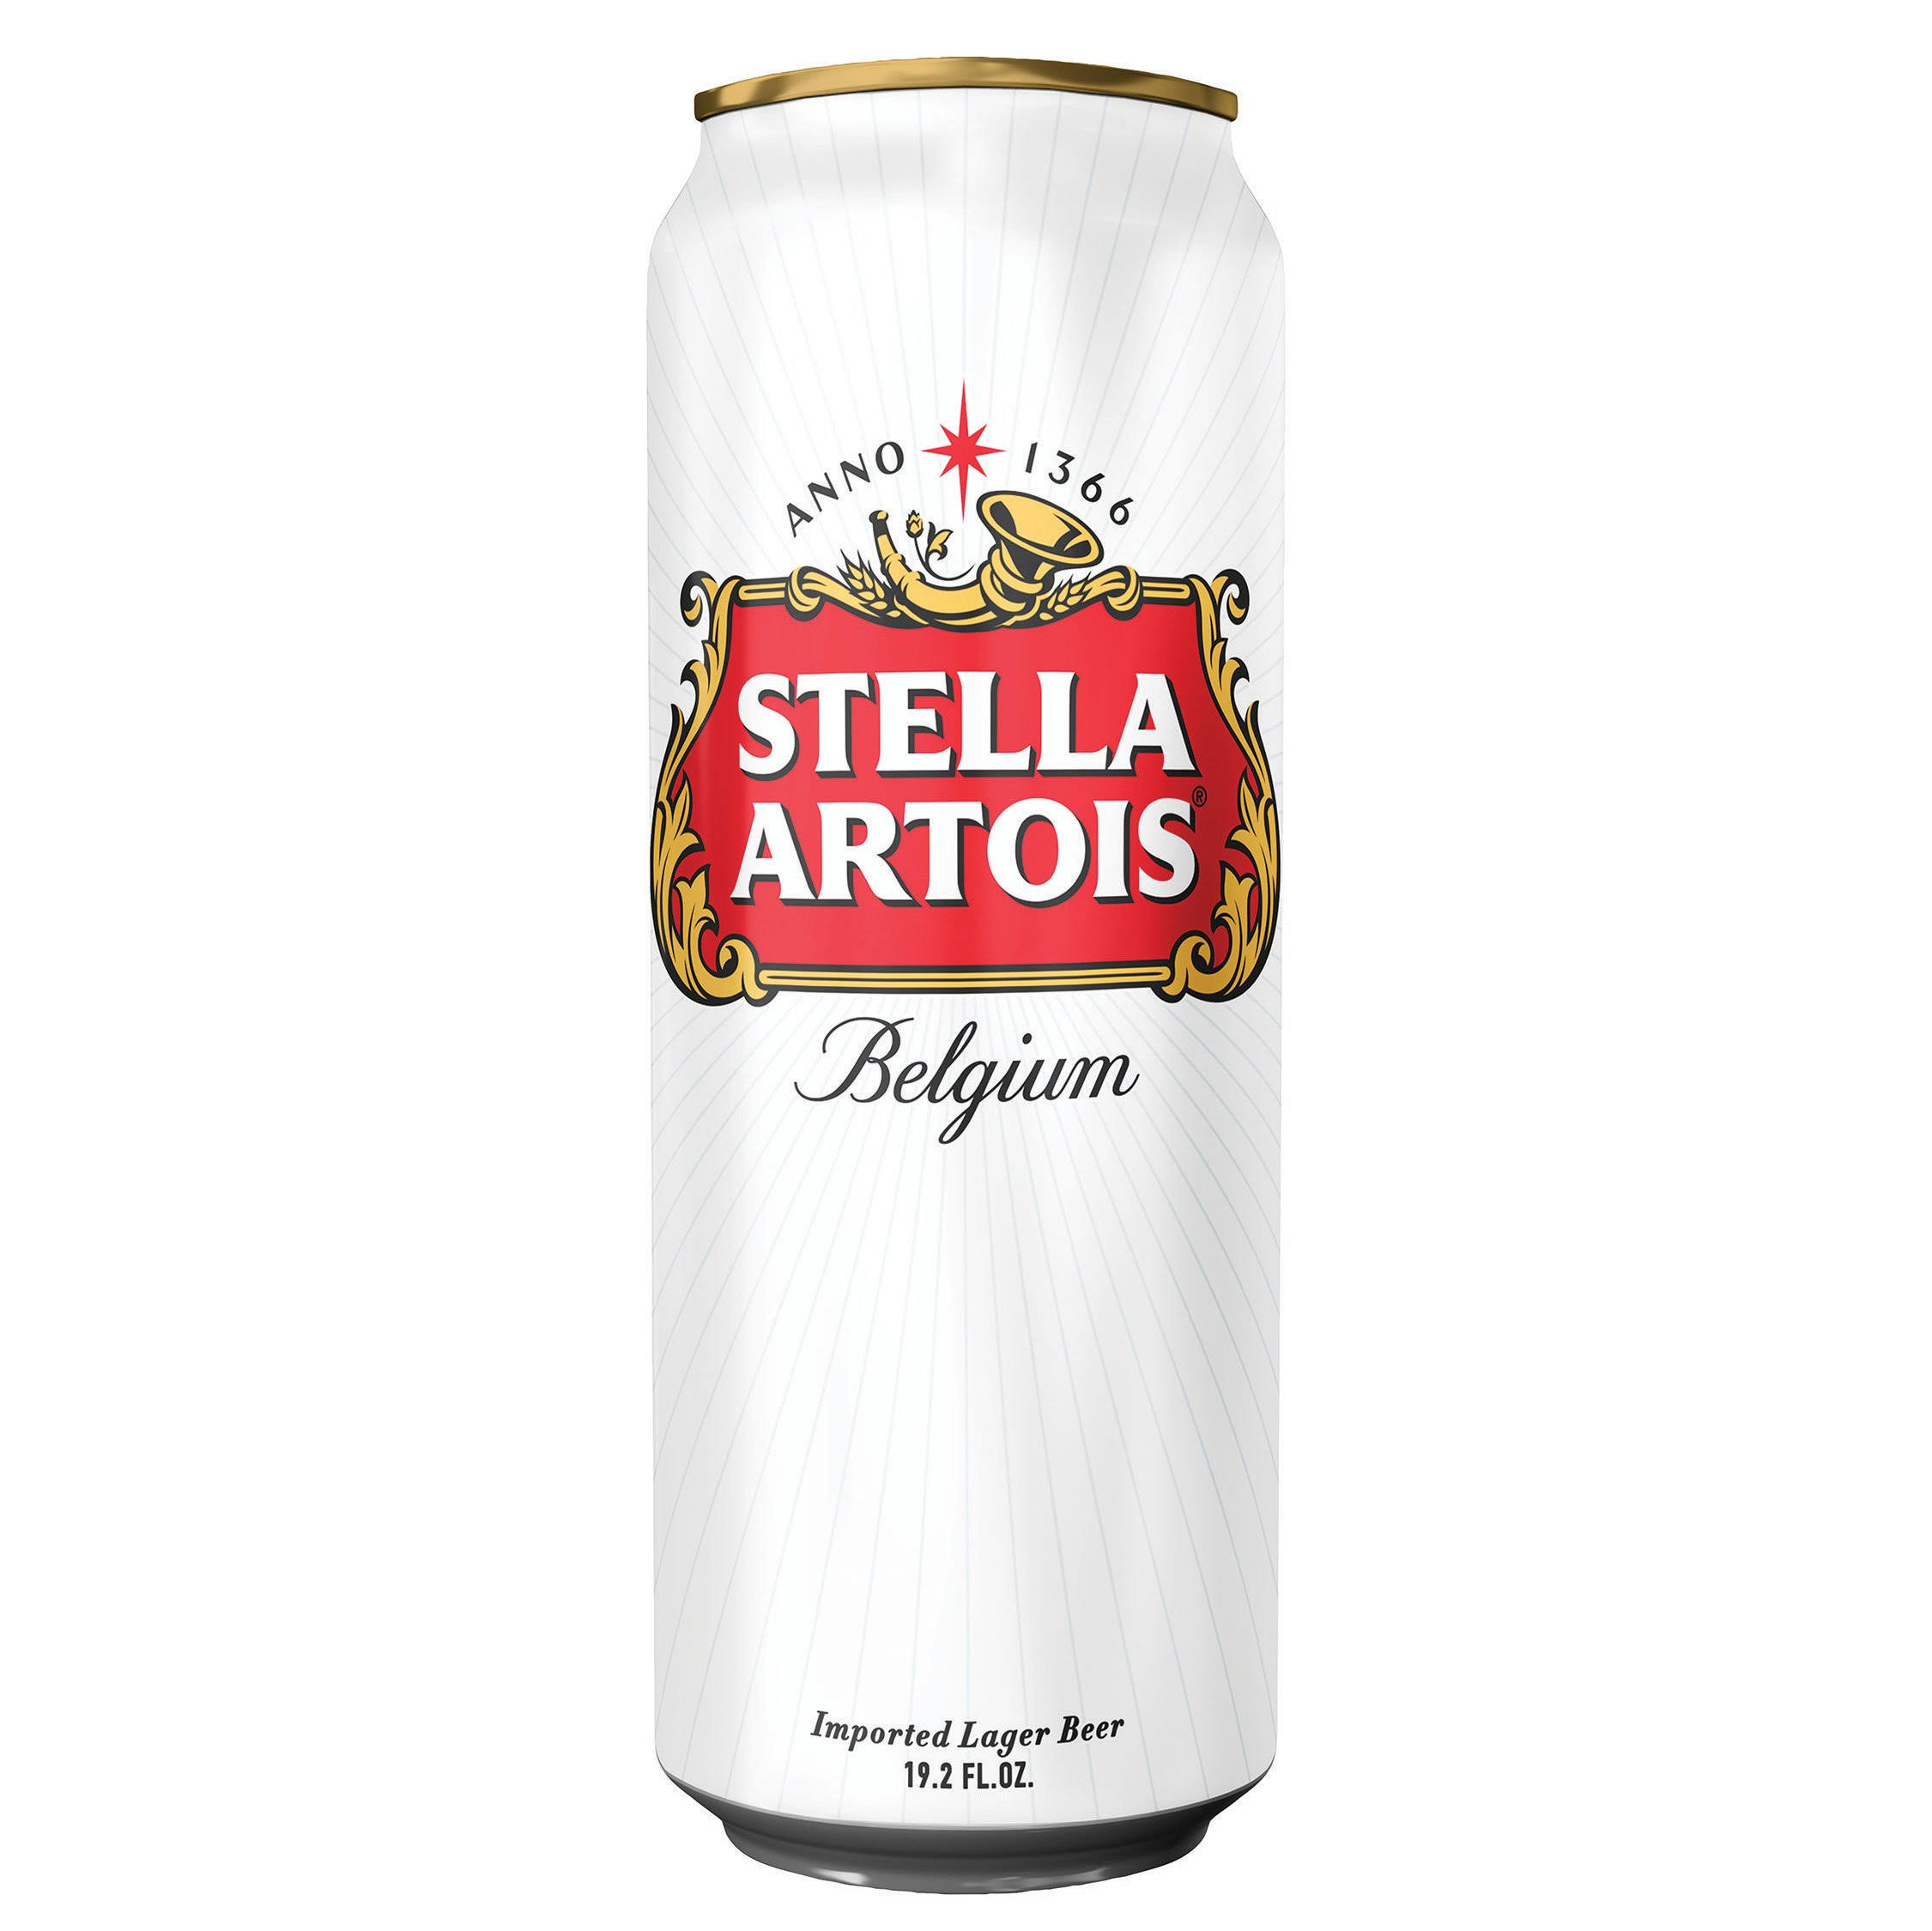 Stella Artois Beer, Imported, Lager, Belgium - 19.2 fl oz